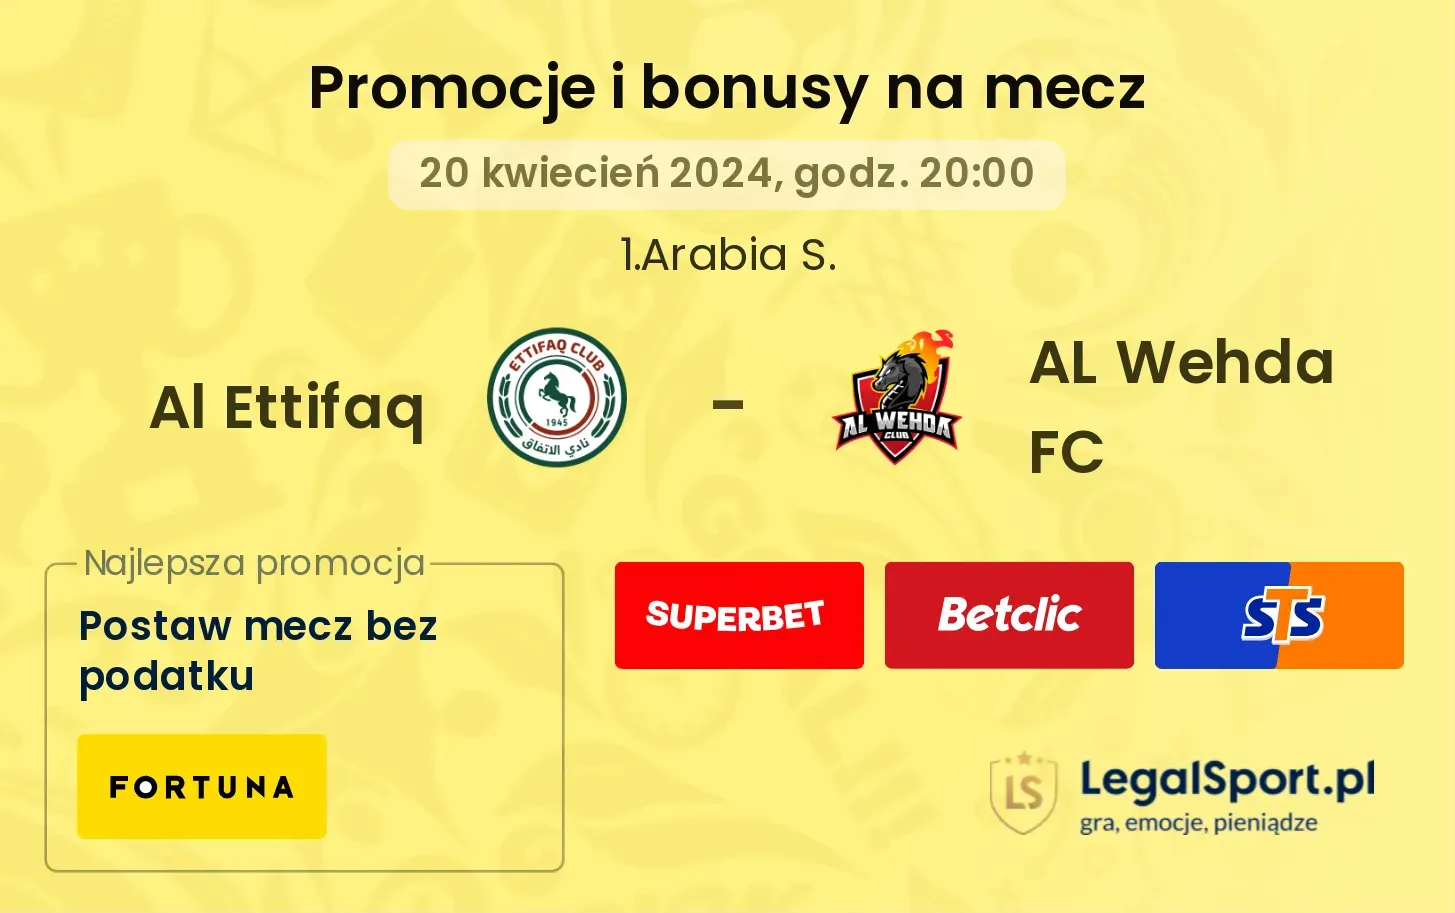 Al Ettifaq - AL Wehda FC promocje bonusy na mecz